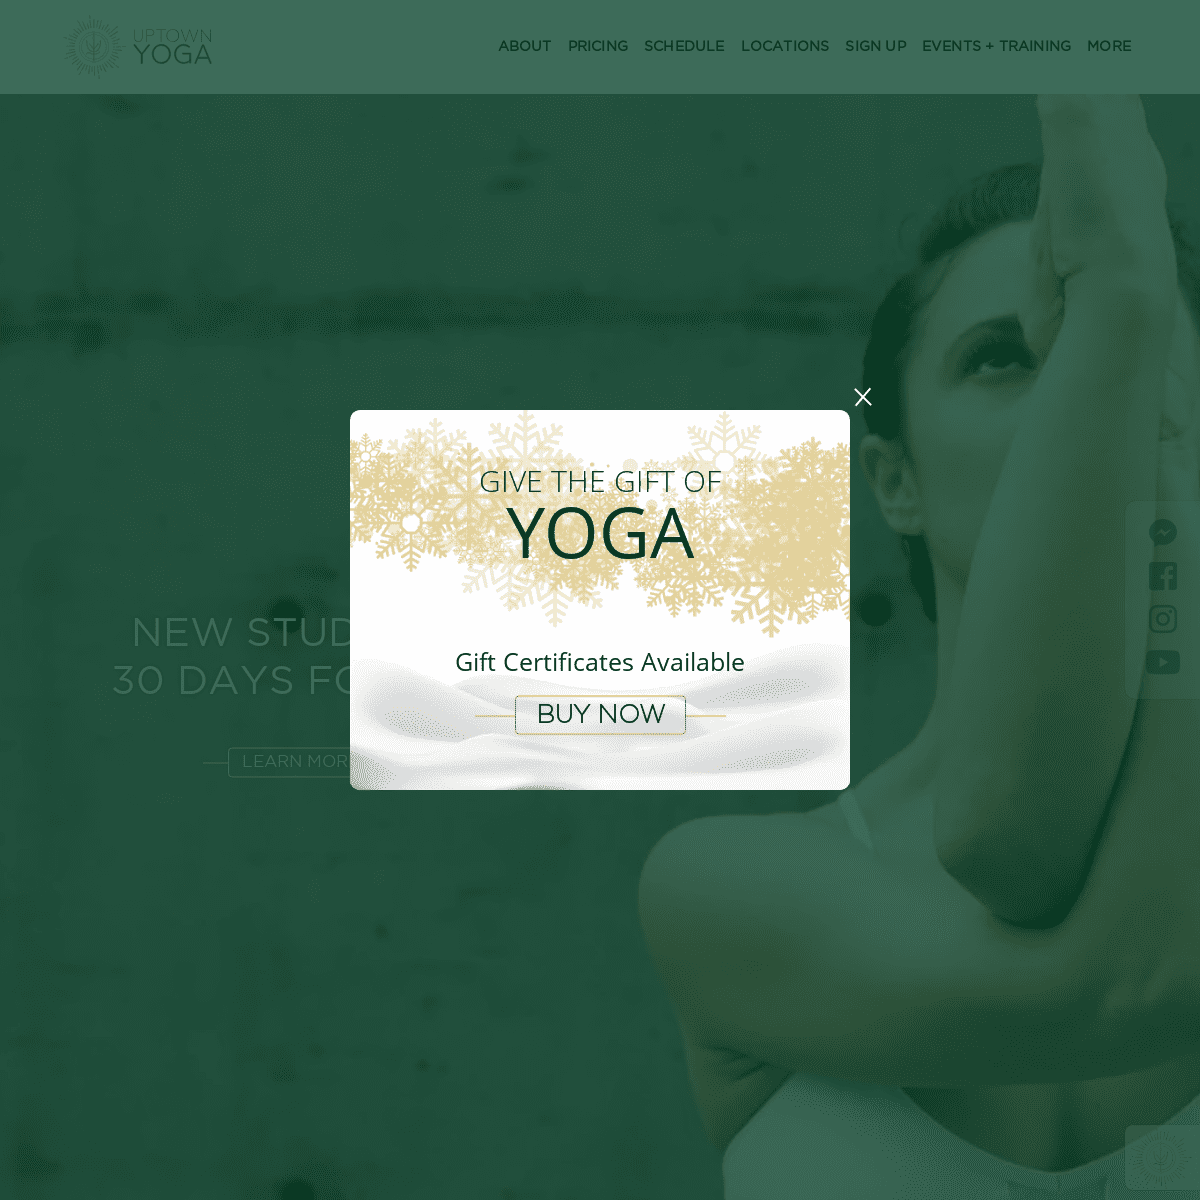 Yoga Retreats and Teacher Training in Dallas - Uptown Yoga